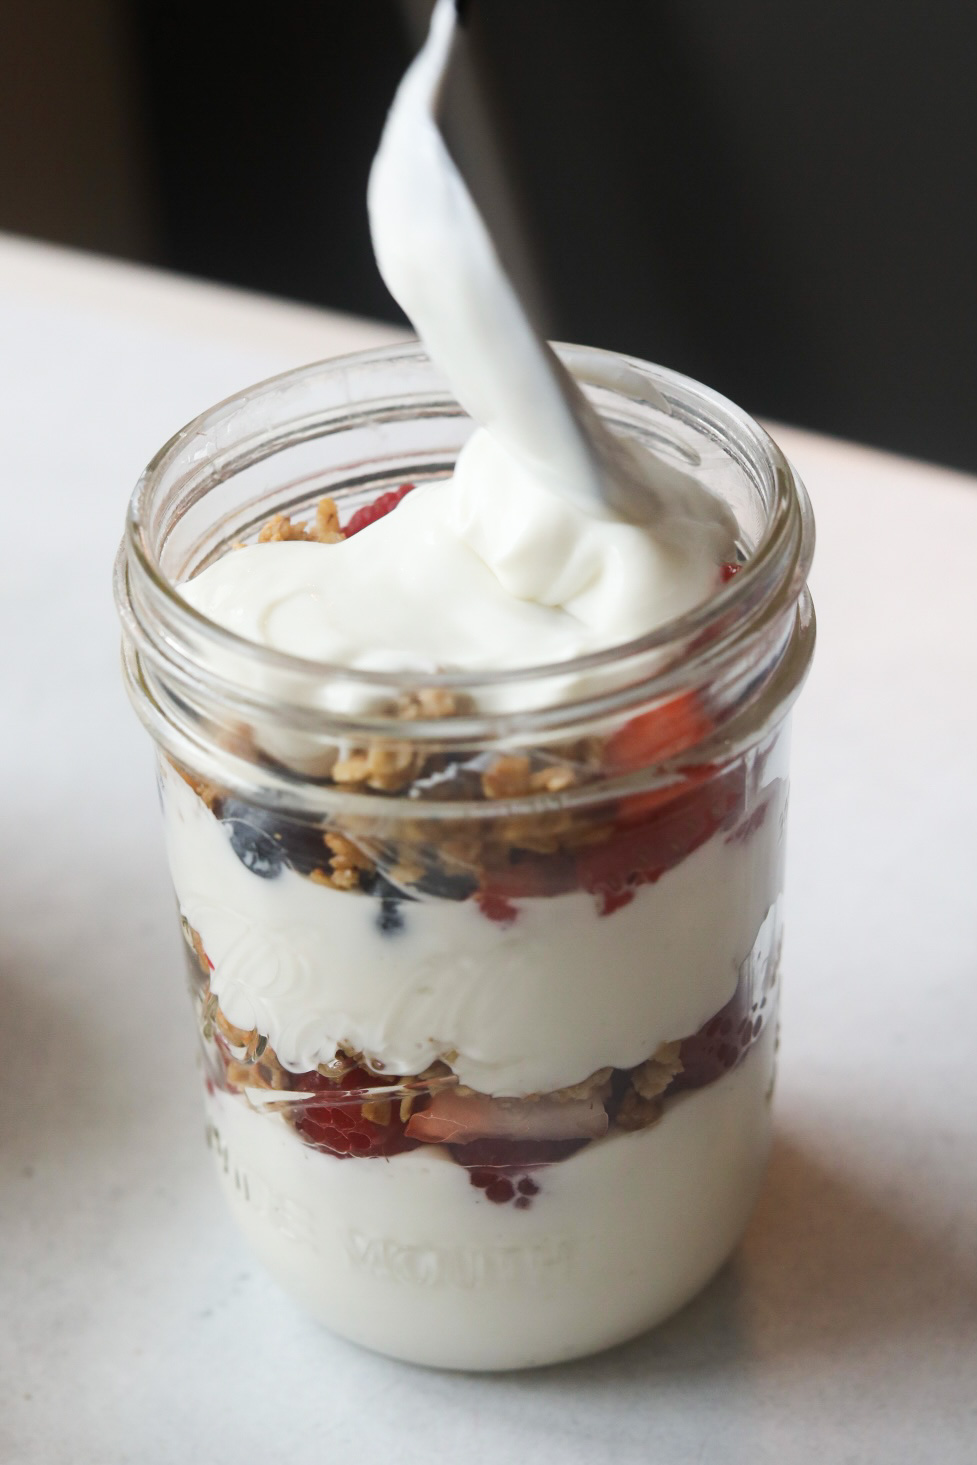 Greek yogurt being spooned into a short glass mason jar.